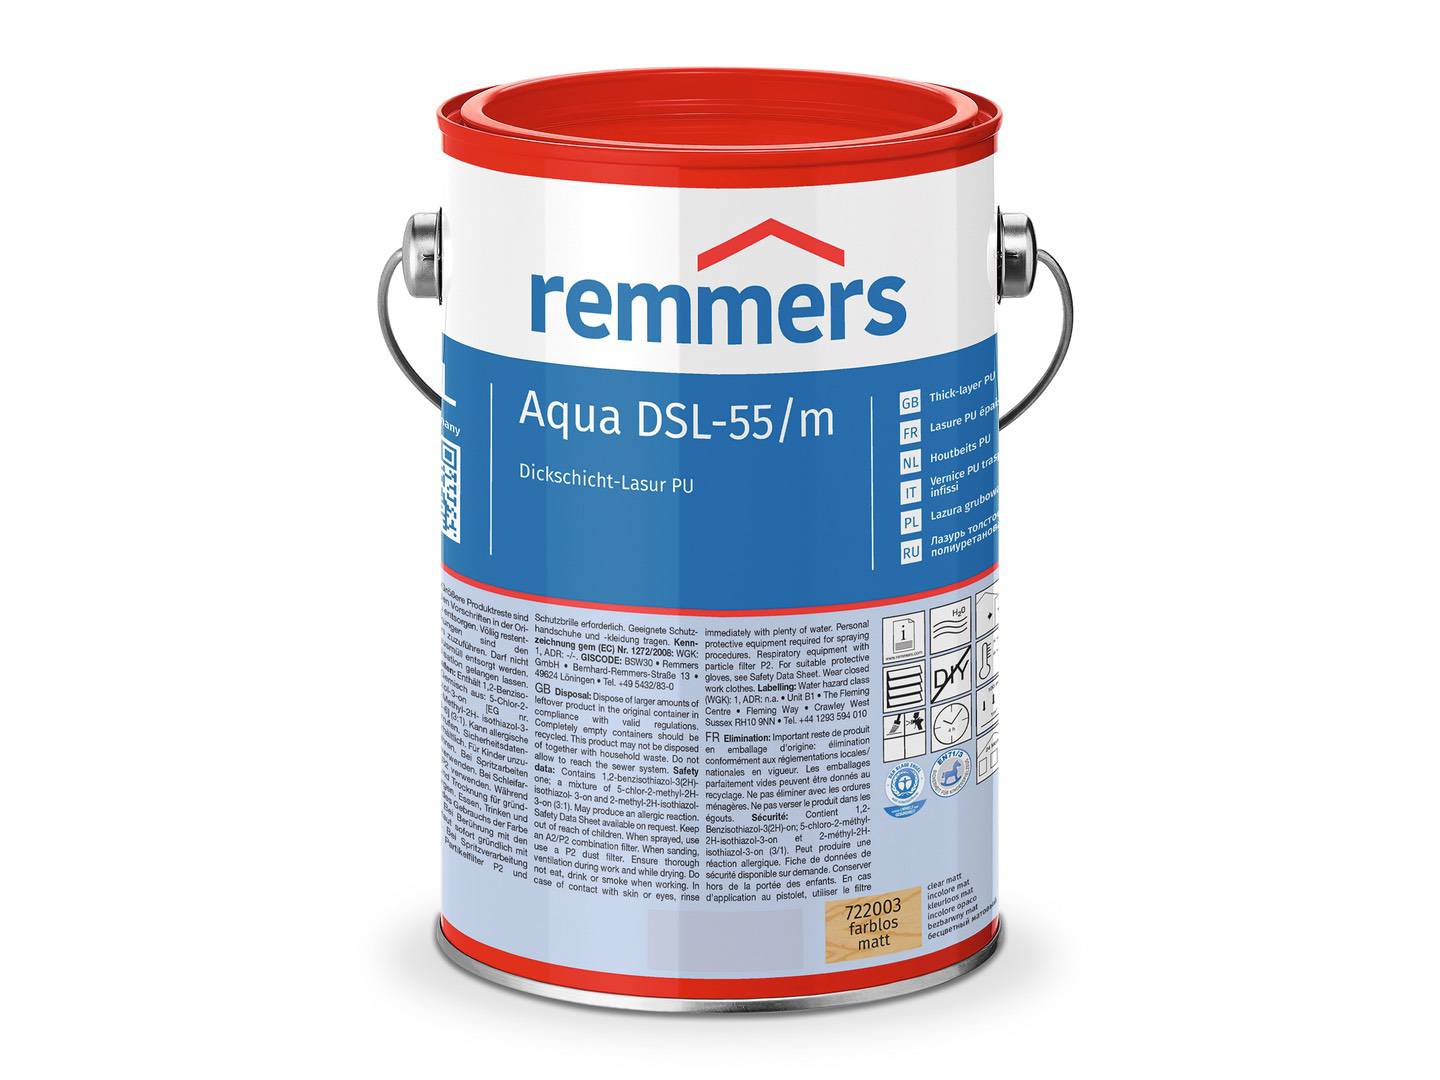 REMMERS Aqua DSL-55-Dickschicht-Lasur PU palisander (RC-720) seidenglänzend 0,75 l